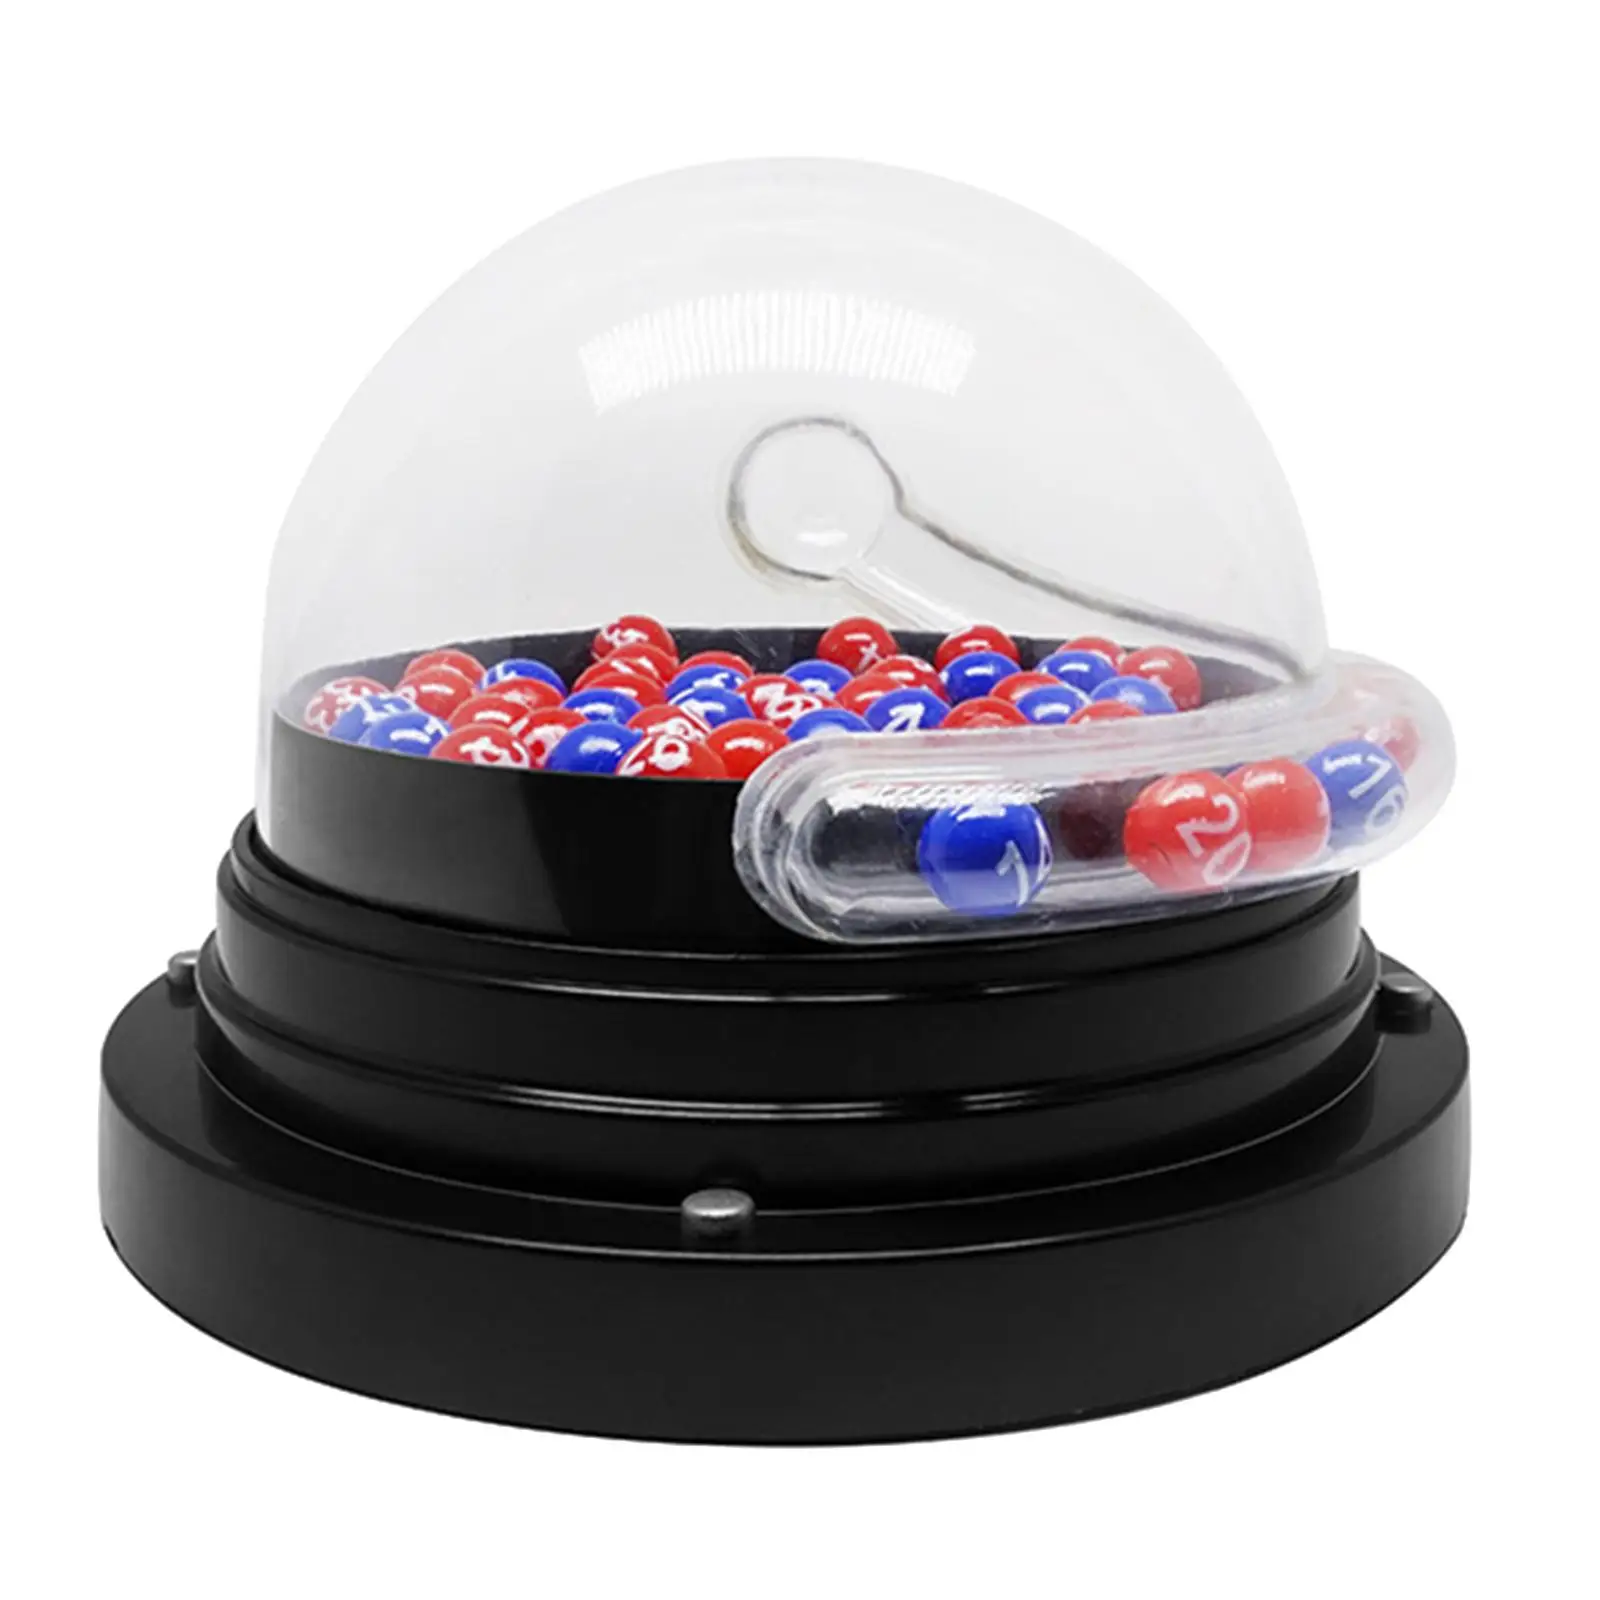 Portable Bingo Lotto Machine Pub Game for Home Entertainment Game Bar Family